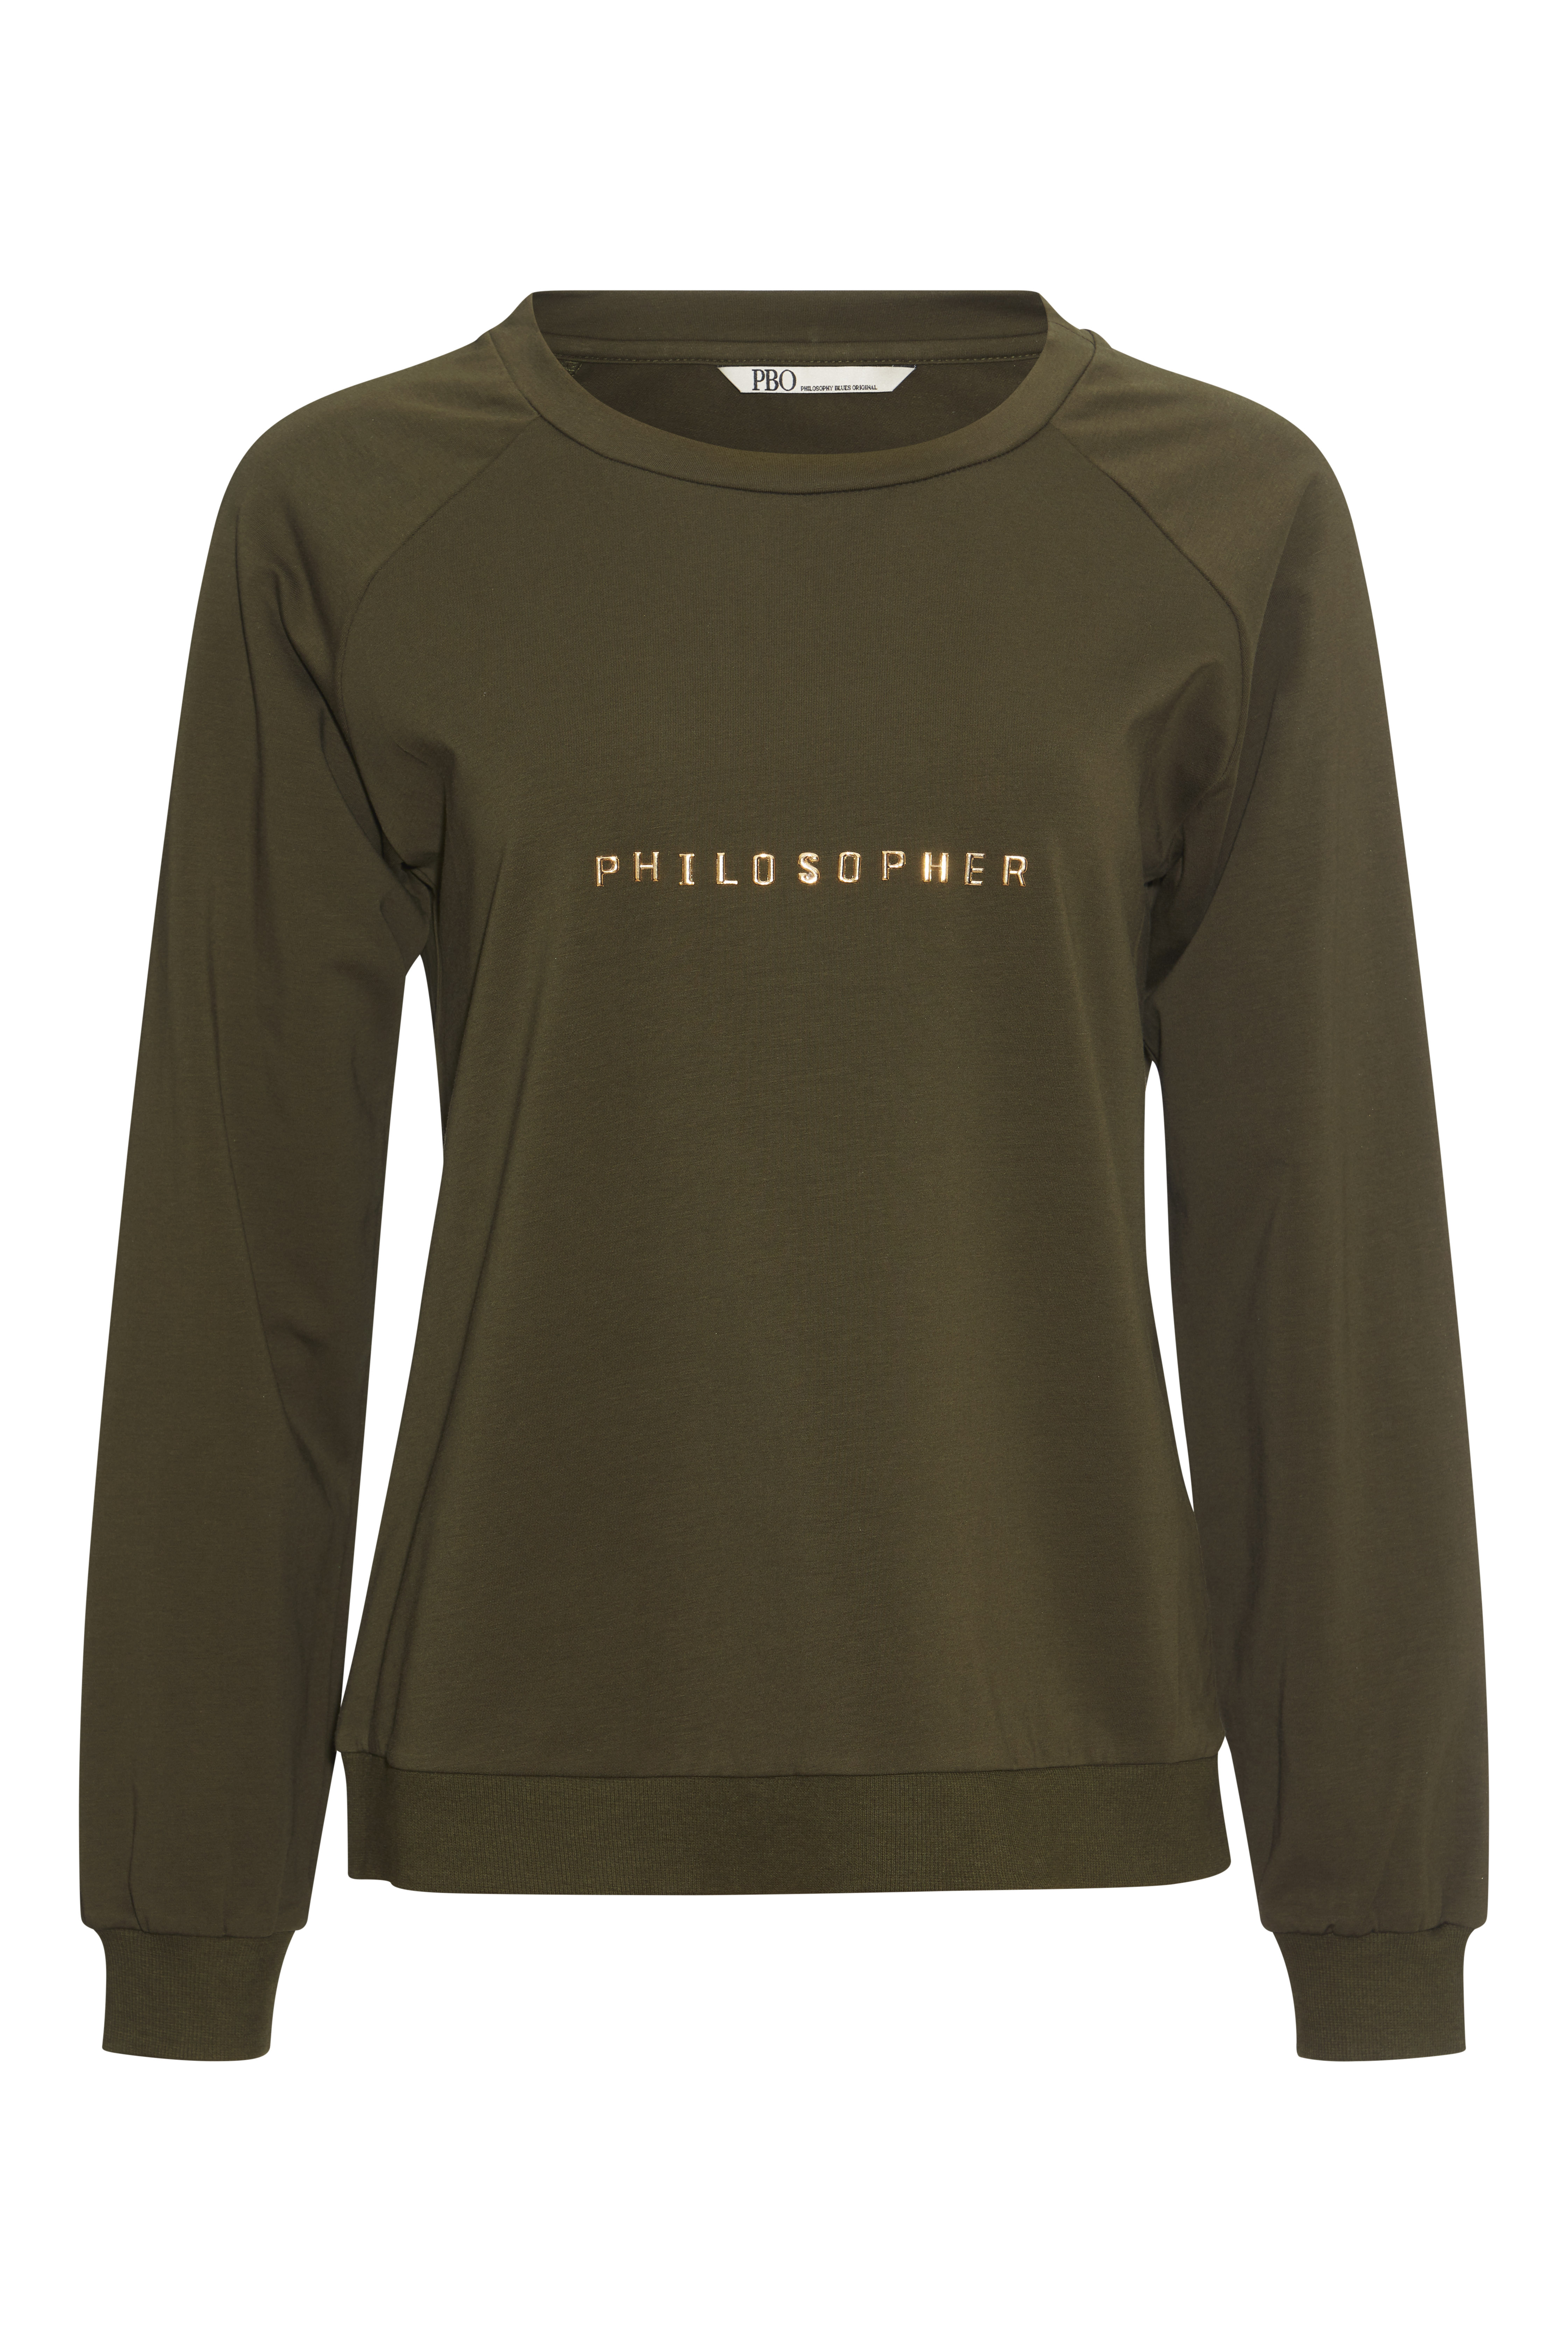 PBO 2391 Folsom Sweatshirts, Ivy Green, XL